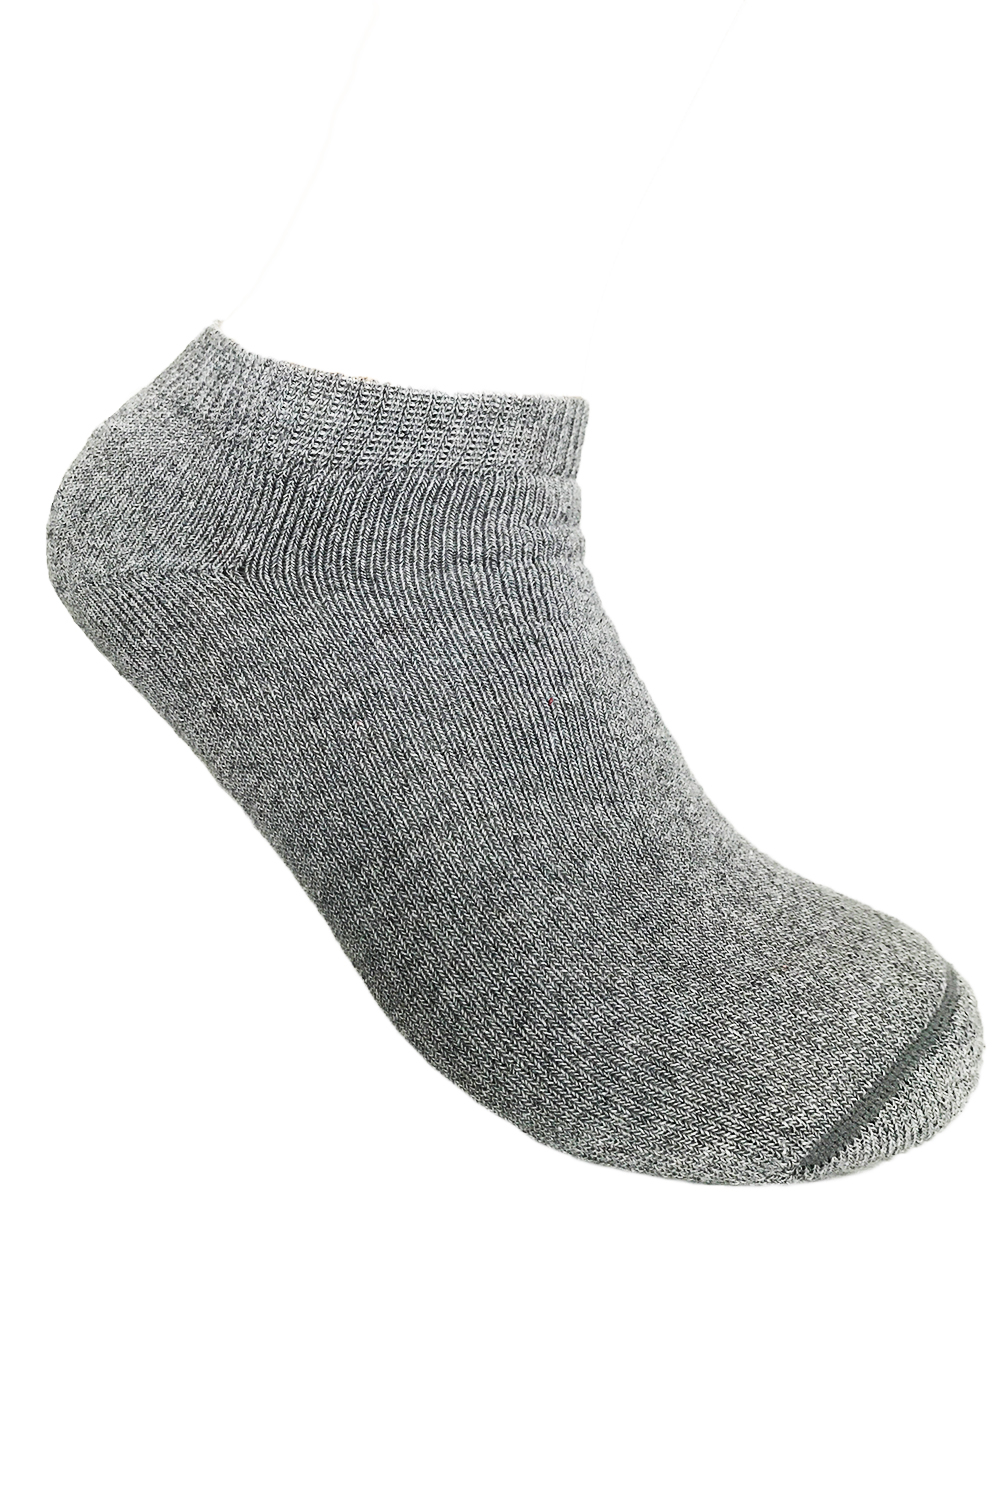 Vela Low Cut Socks by Osom Brand — Osom Brand